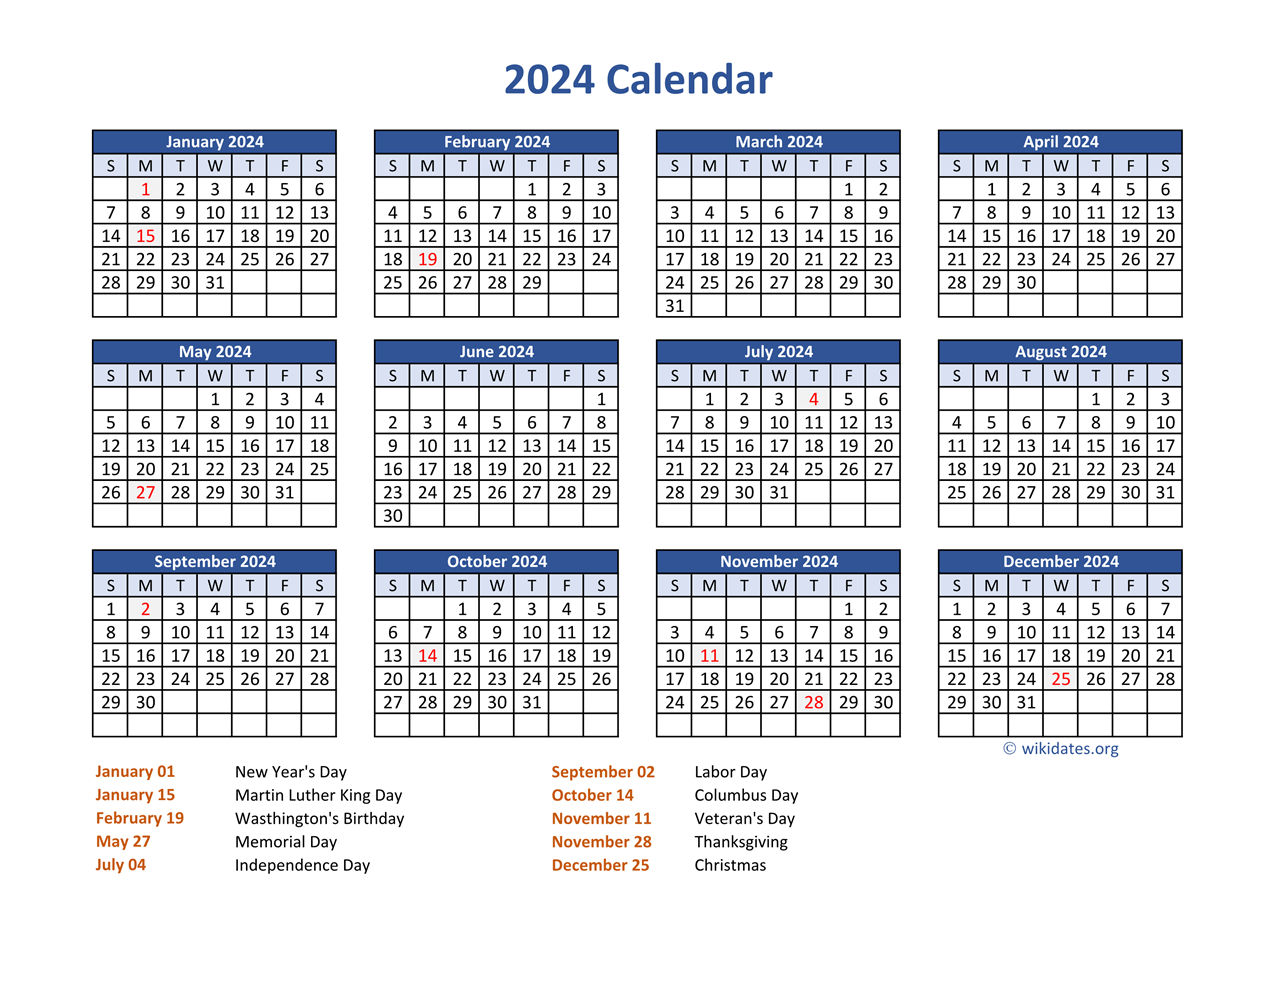 Pdf Calendar 2024 With Federal Holidays | Wikidates | Printable Calendar 2024 With Federal Holidays